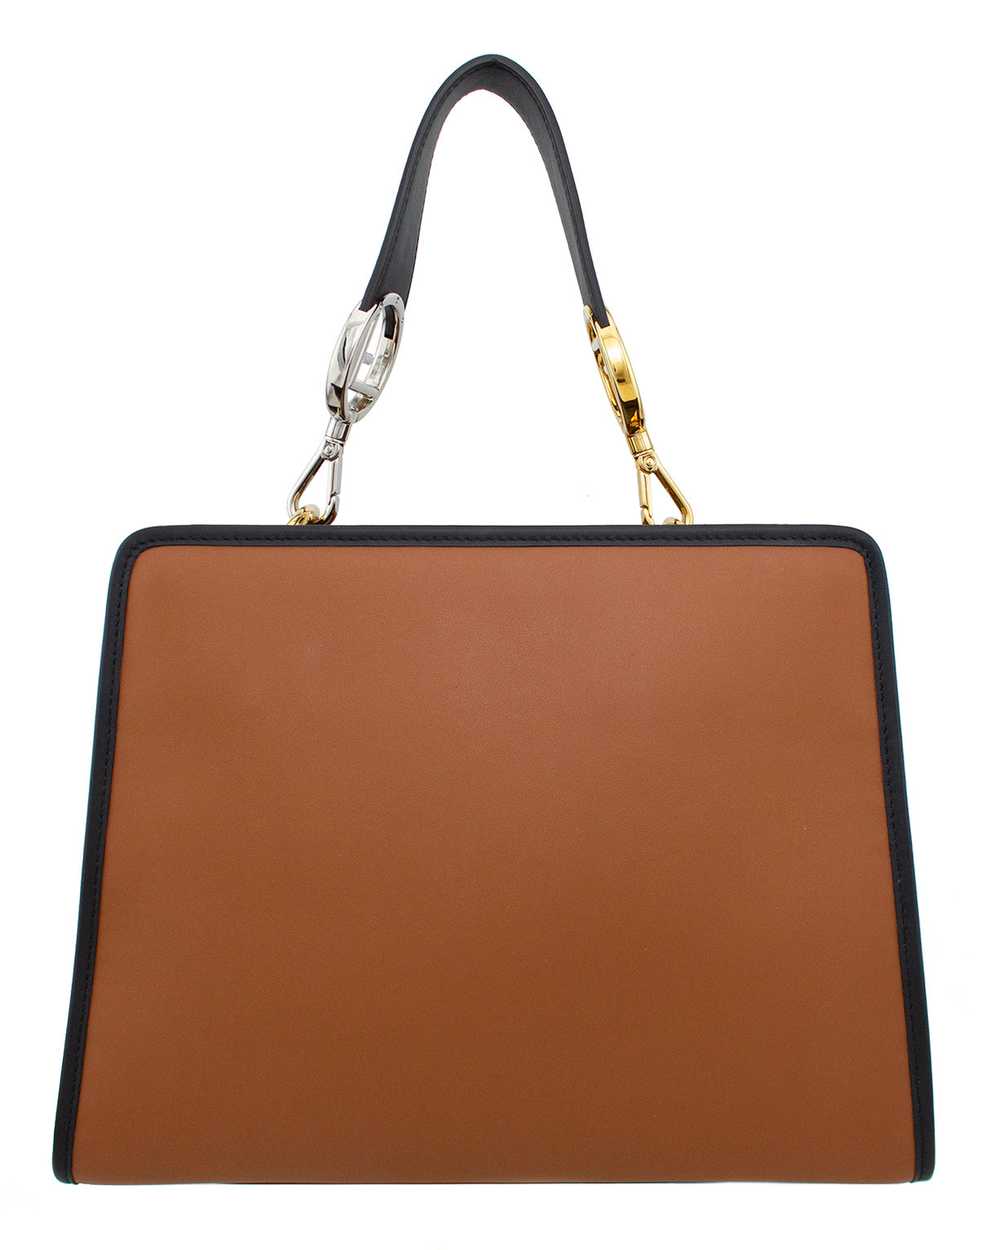 Fendi Brown & Black Leather Runaway Bag - image 3